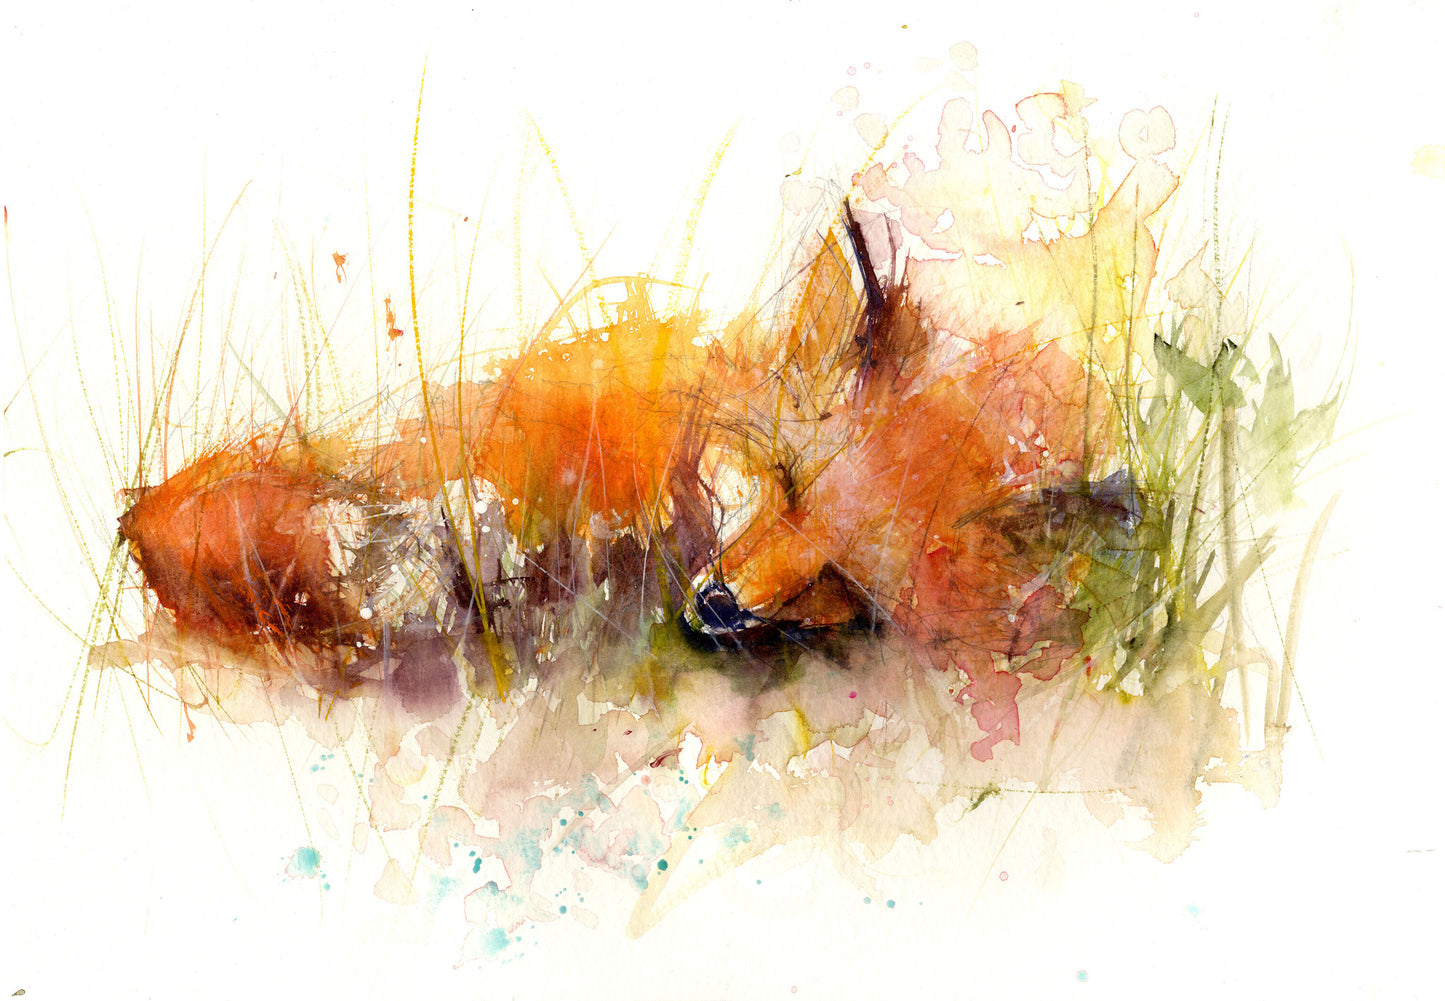 LIMITED EDITON PRINT 'Sleeping Fox' - Jen Buckley Art limited edition animal art prints